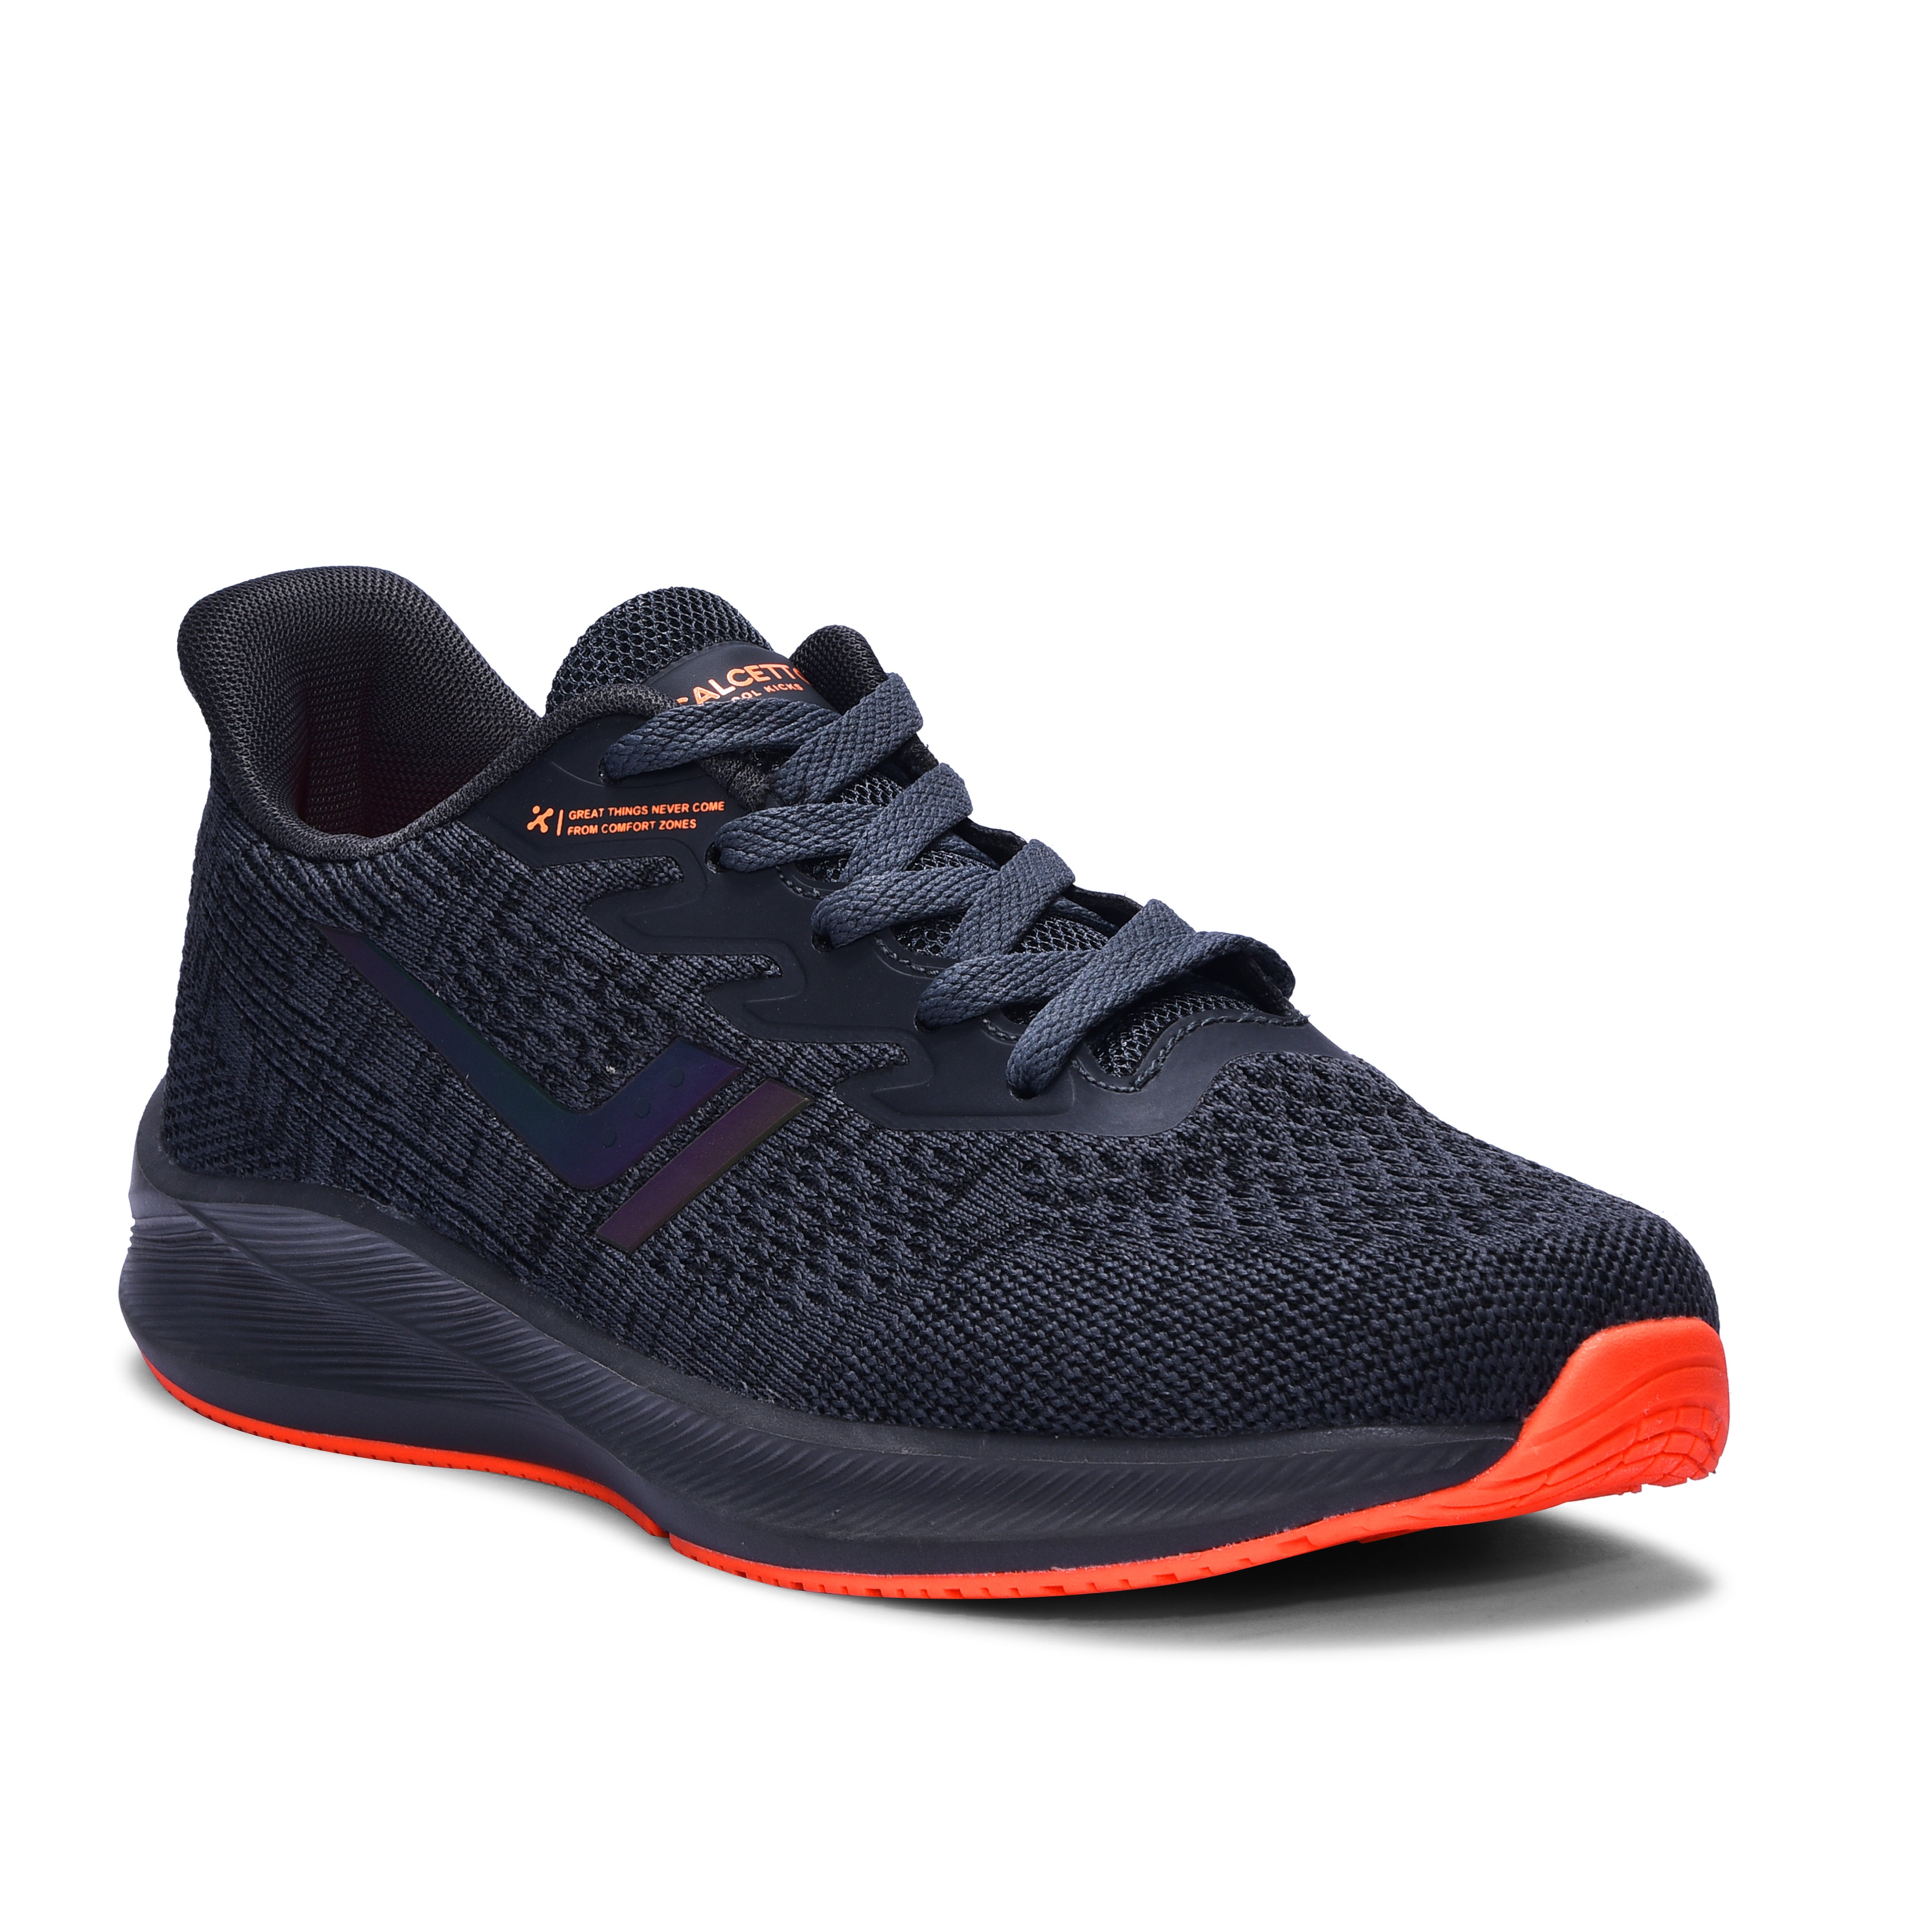 Calcetto CLT-0964 D Grey Orange Running Shoe For Men